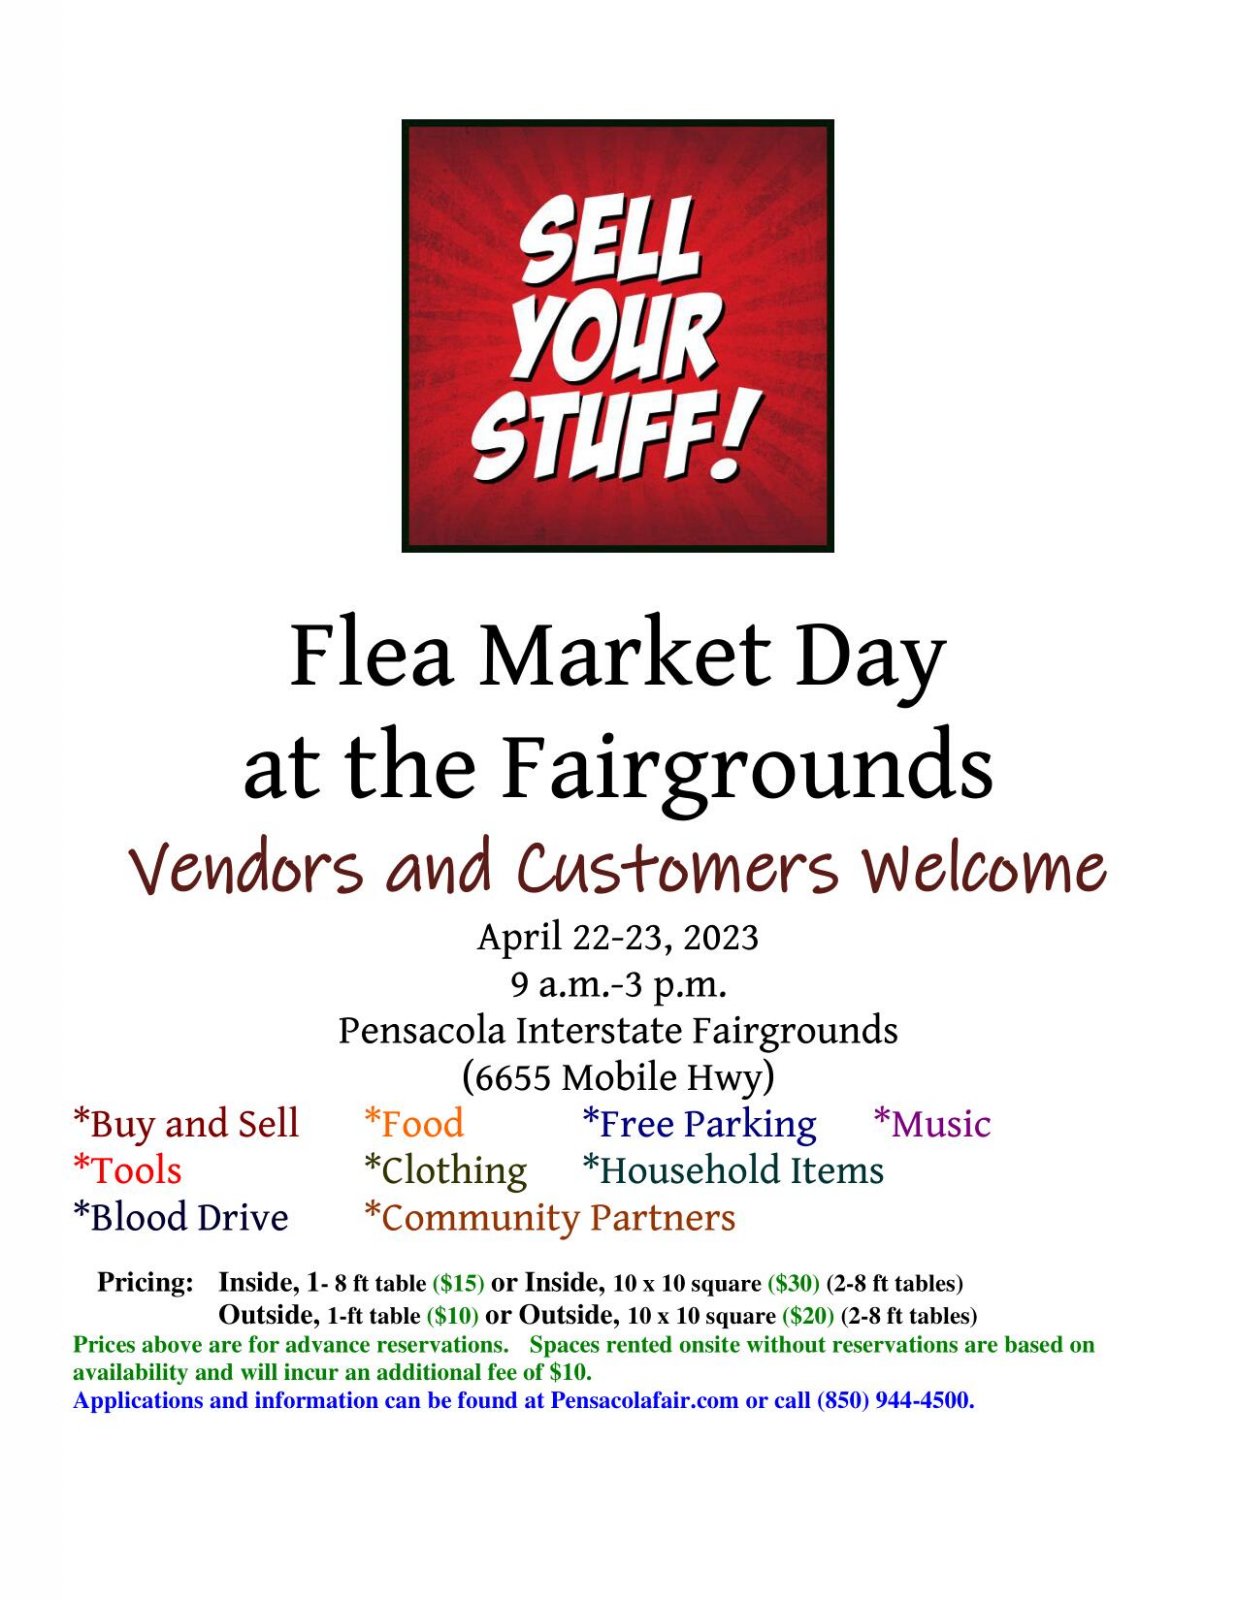 flea-market-flyer.jpg